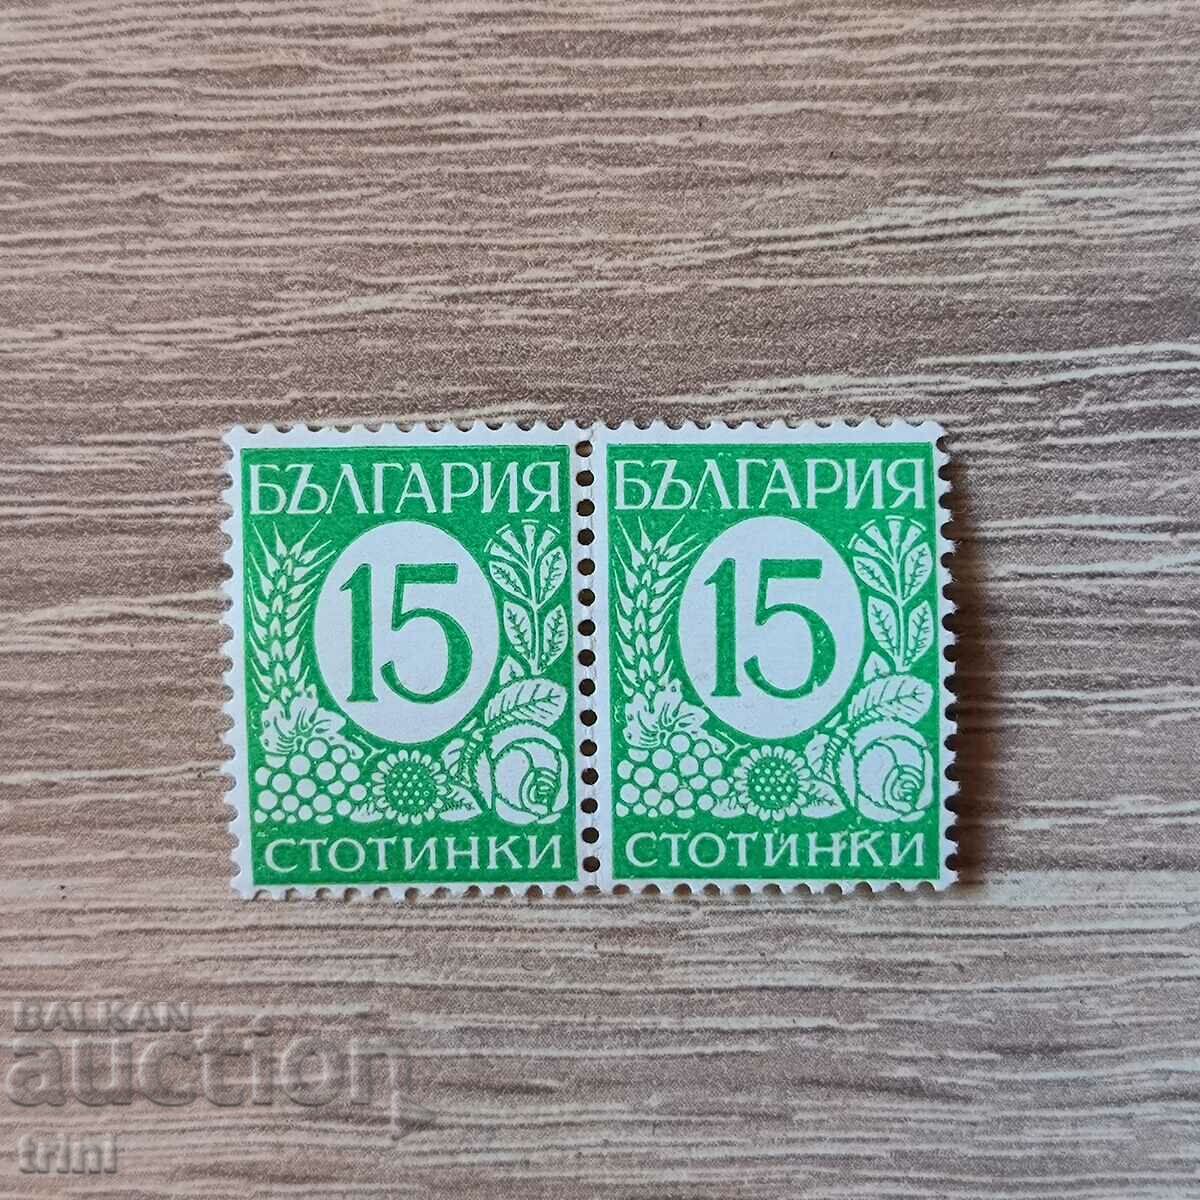 Bulgaria 1936 15 cents